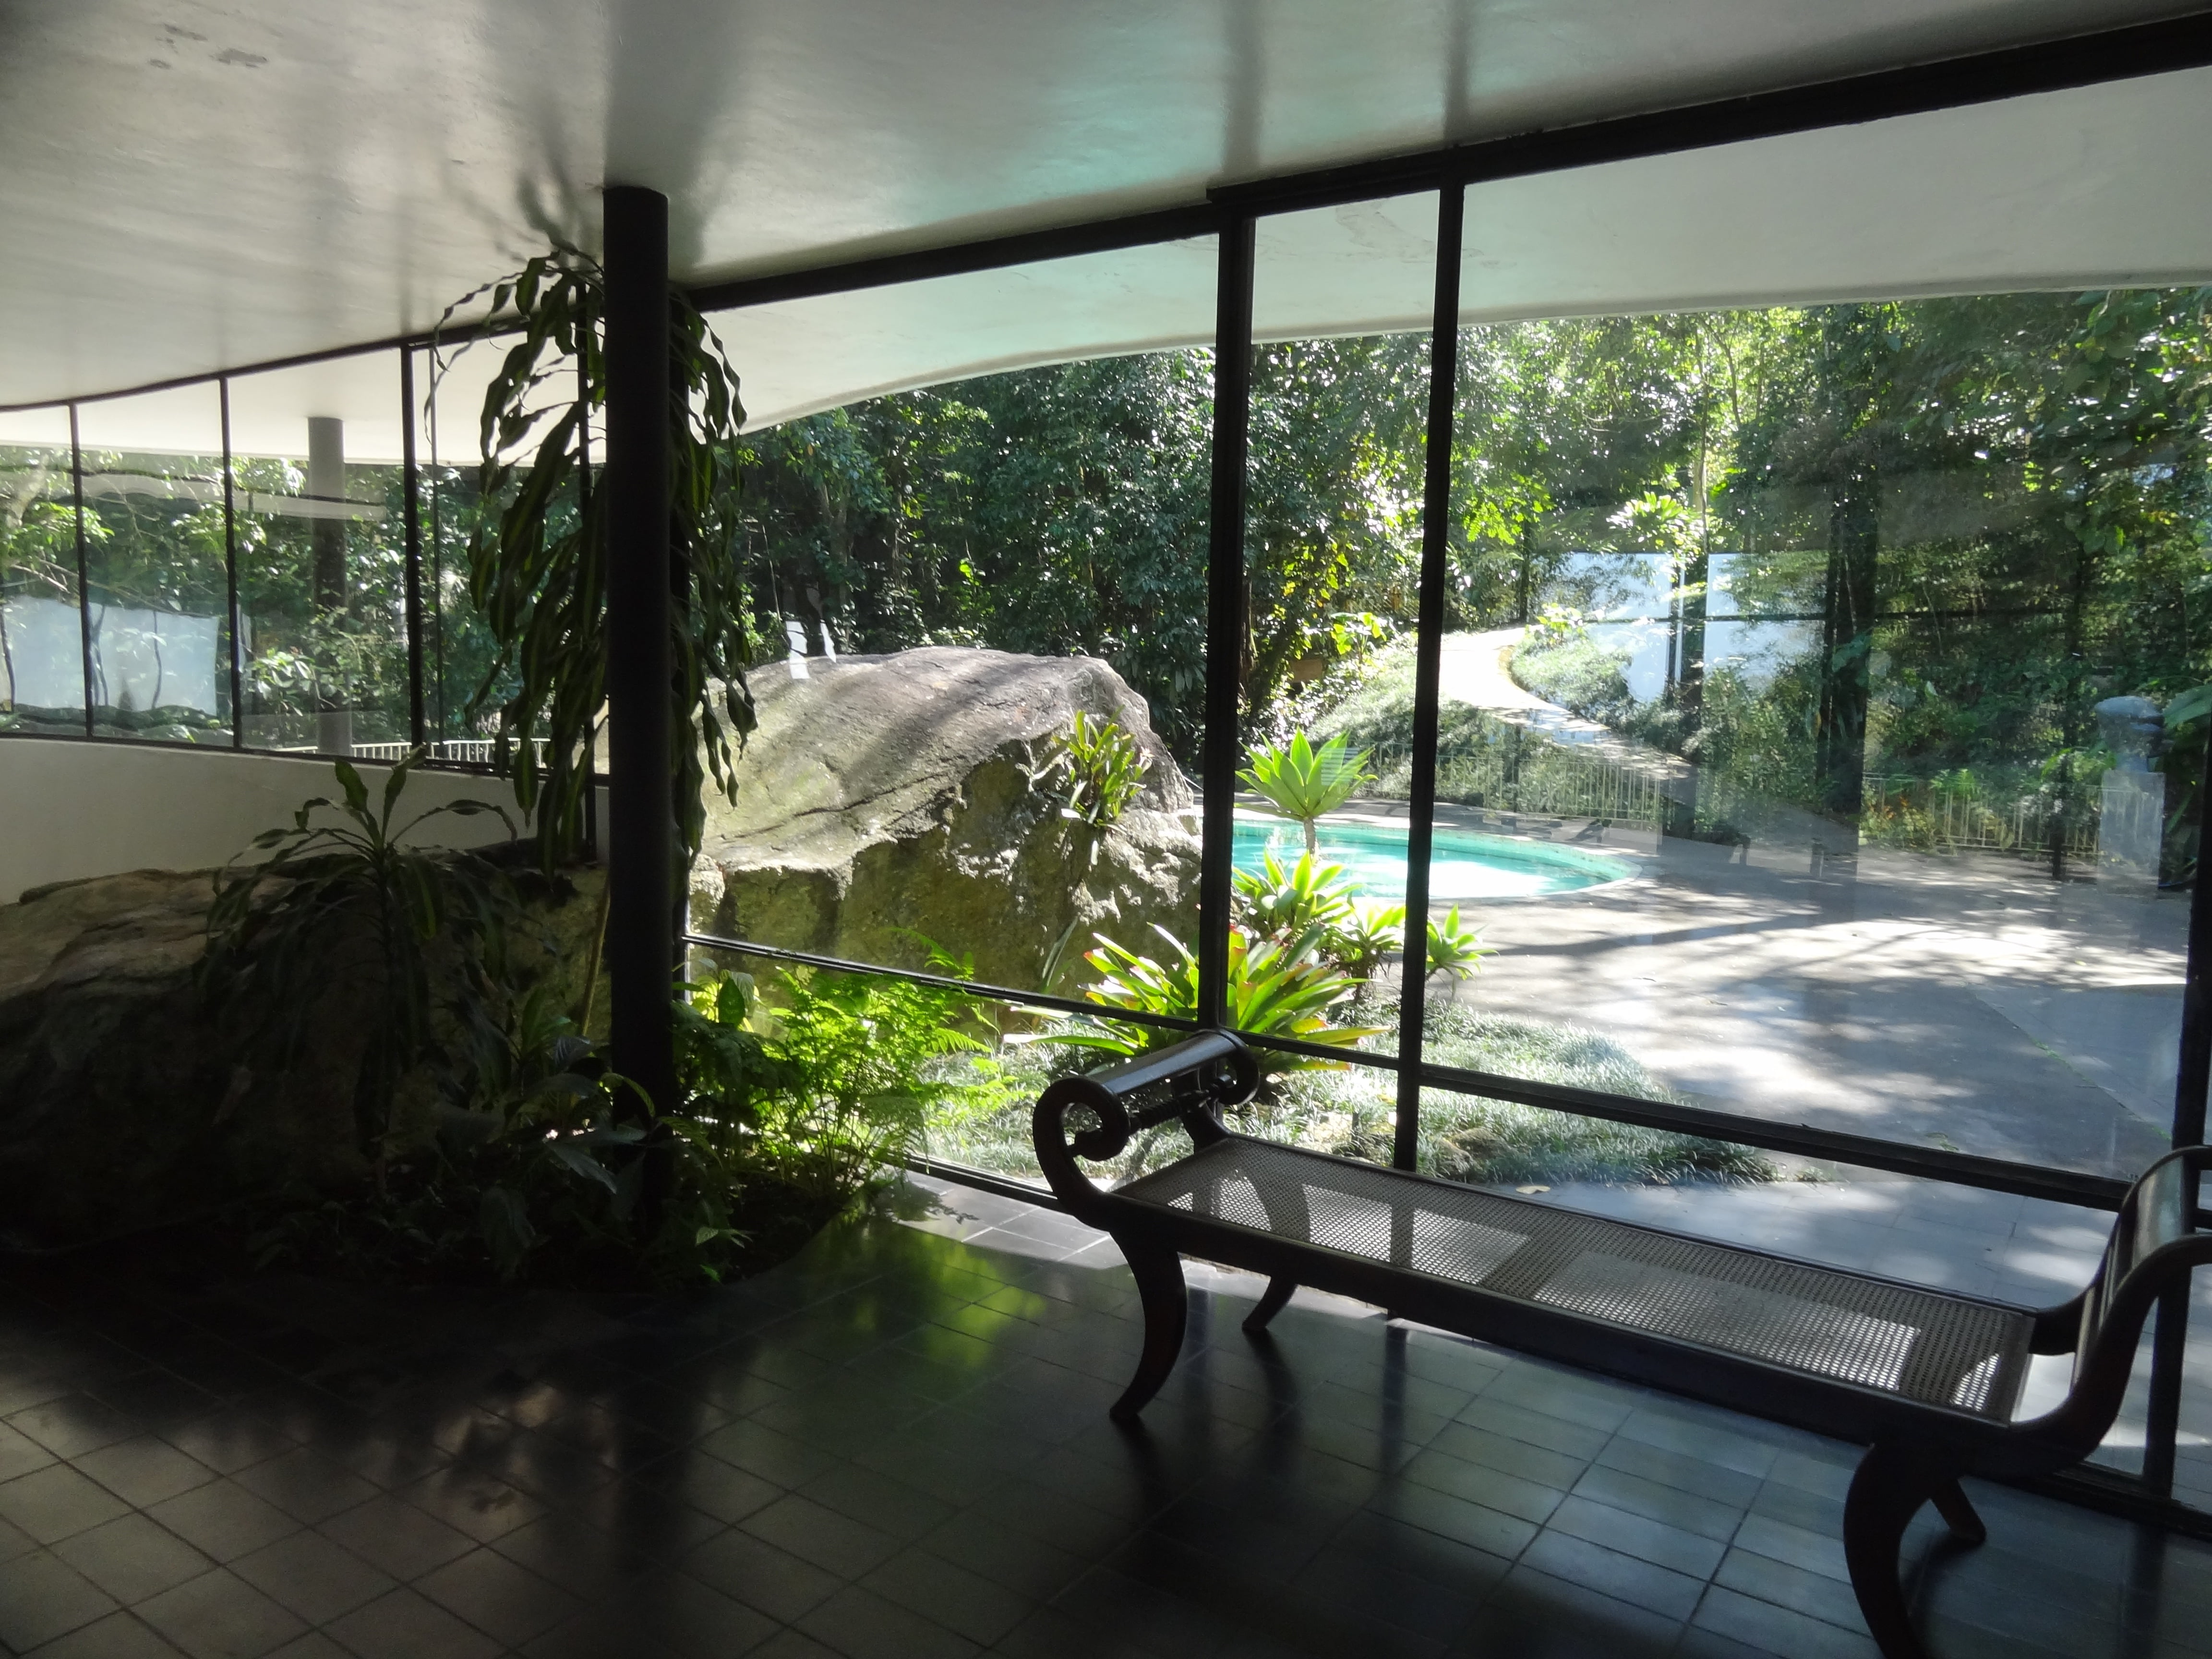 extraordinary view to the pool and front garden The Home of a Legend-Casa das Canoas by Oscar Niemeyer in Rio de Janeiro homesthetics (1)